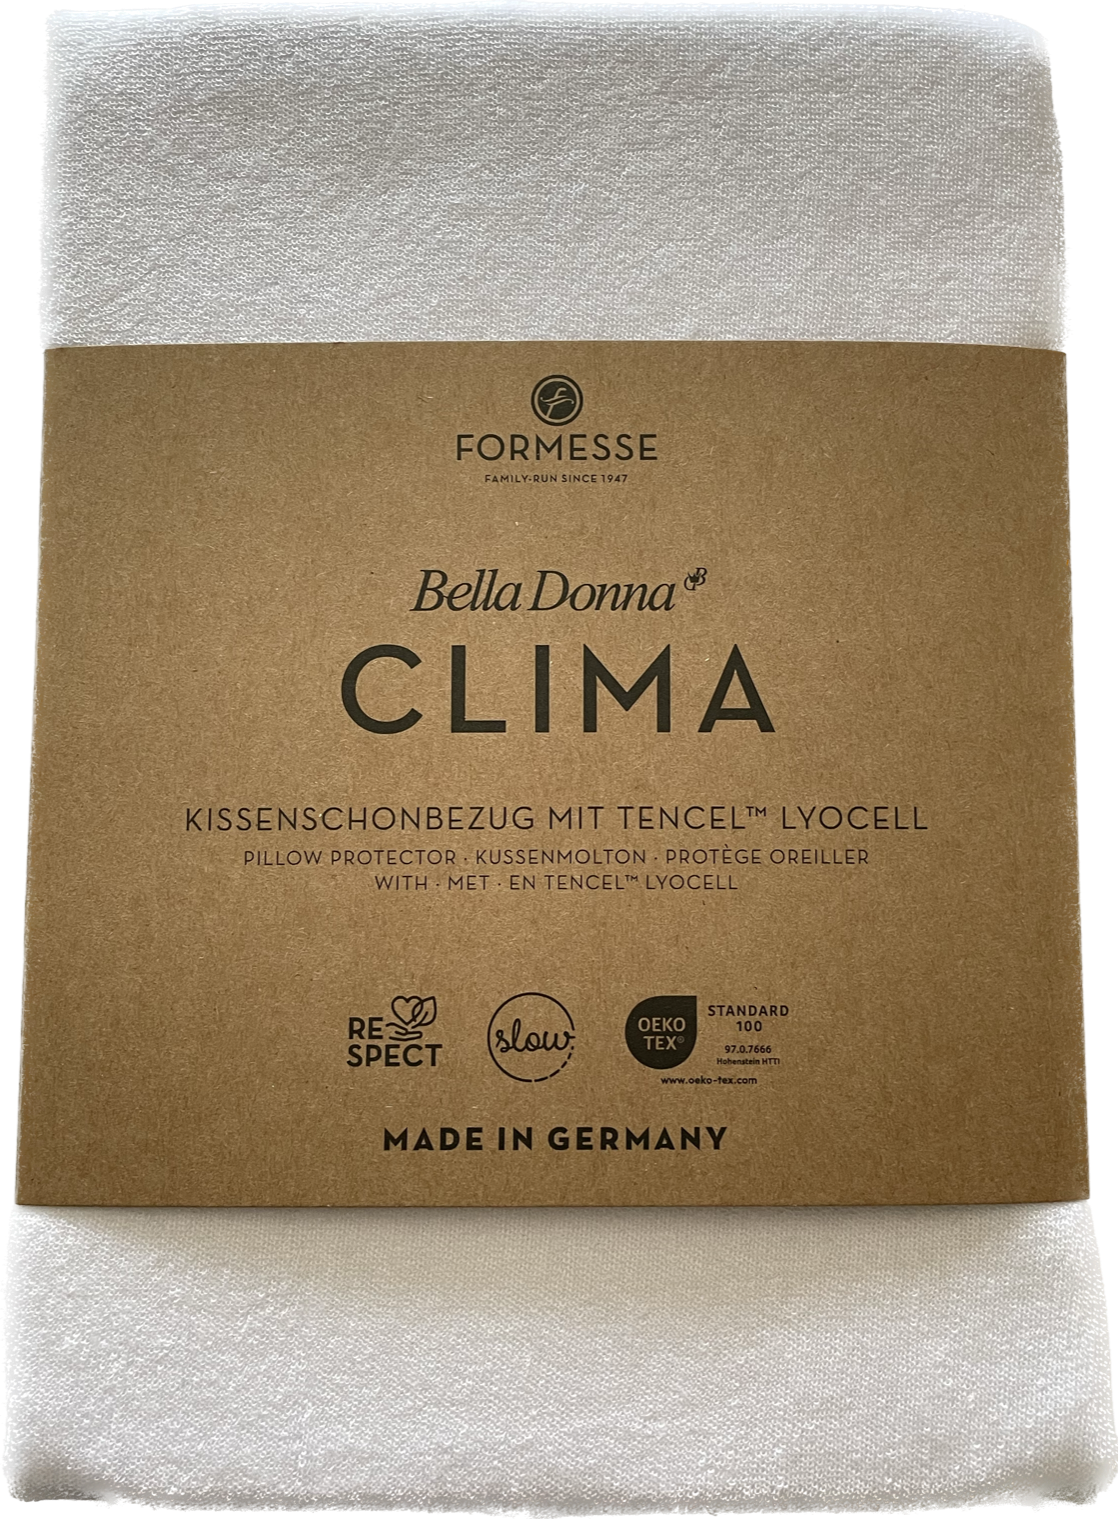 Neu Formesse Bella Donna Clima Kissenschonbezug mit Tencel 40x80 cm oeko-tex